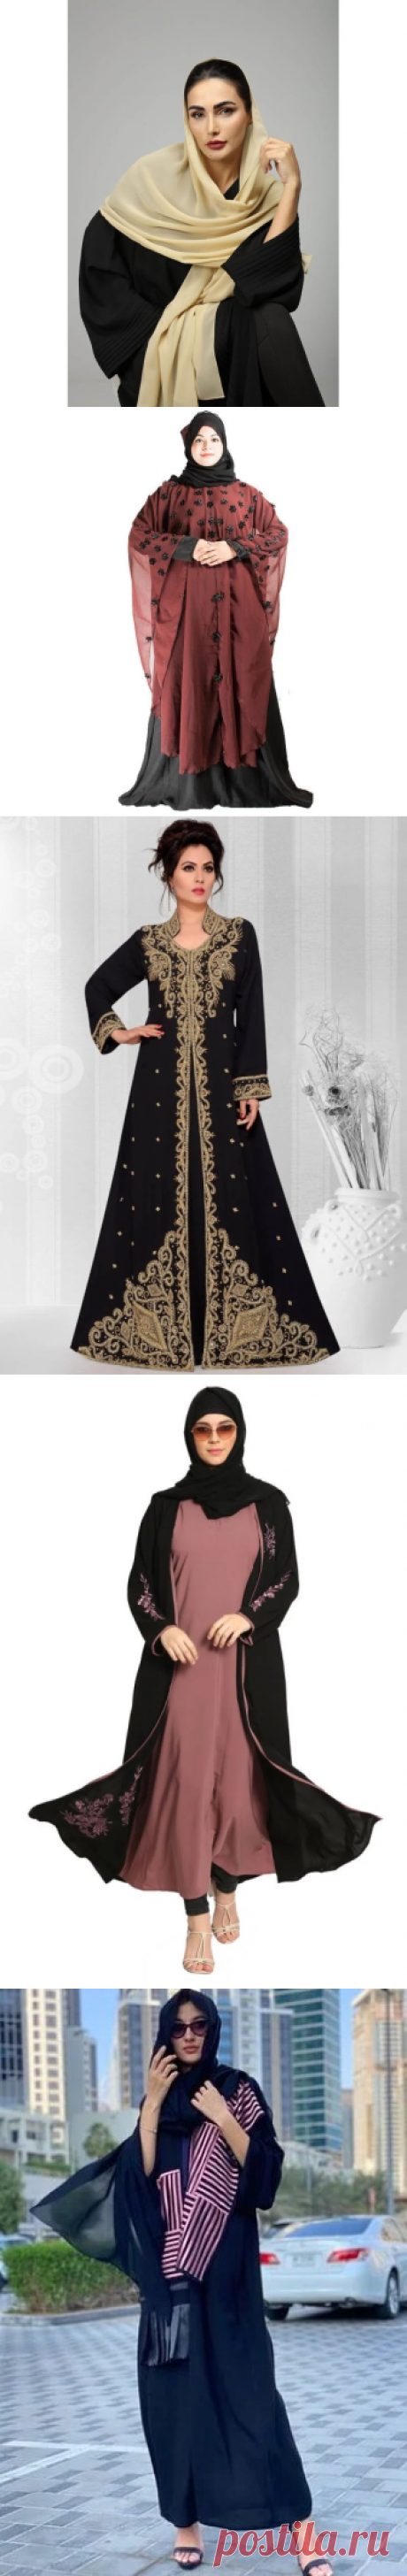 Redefining Modesty with Luxury: The Rise of Glamorous Abayas